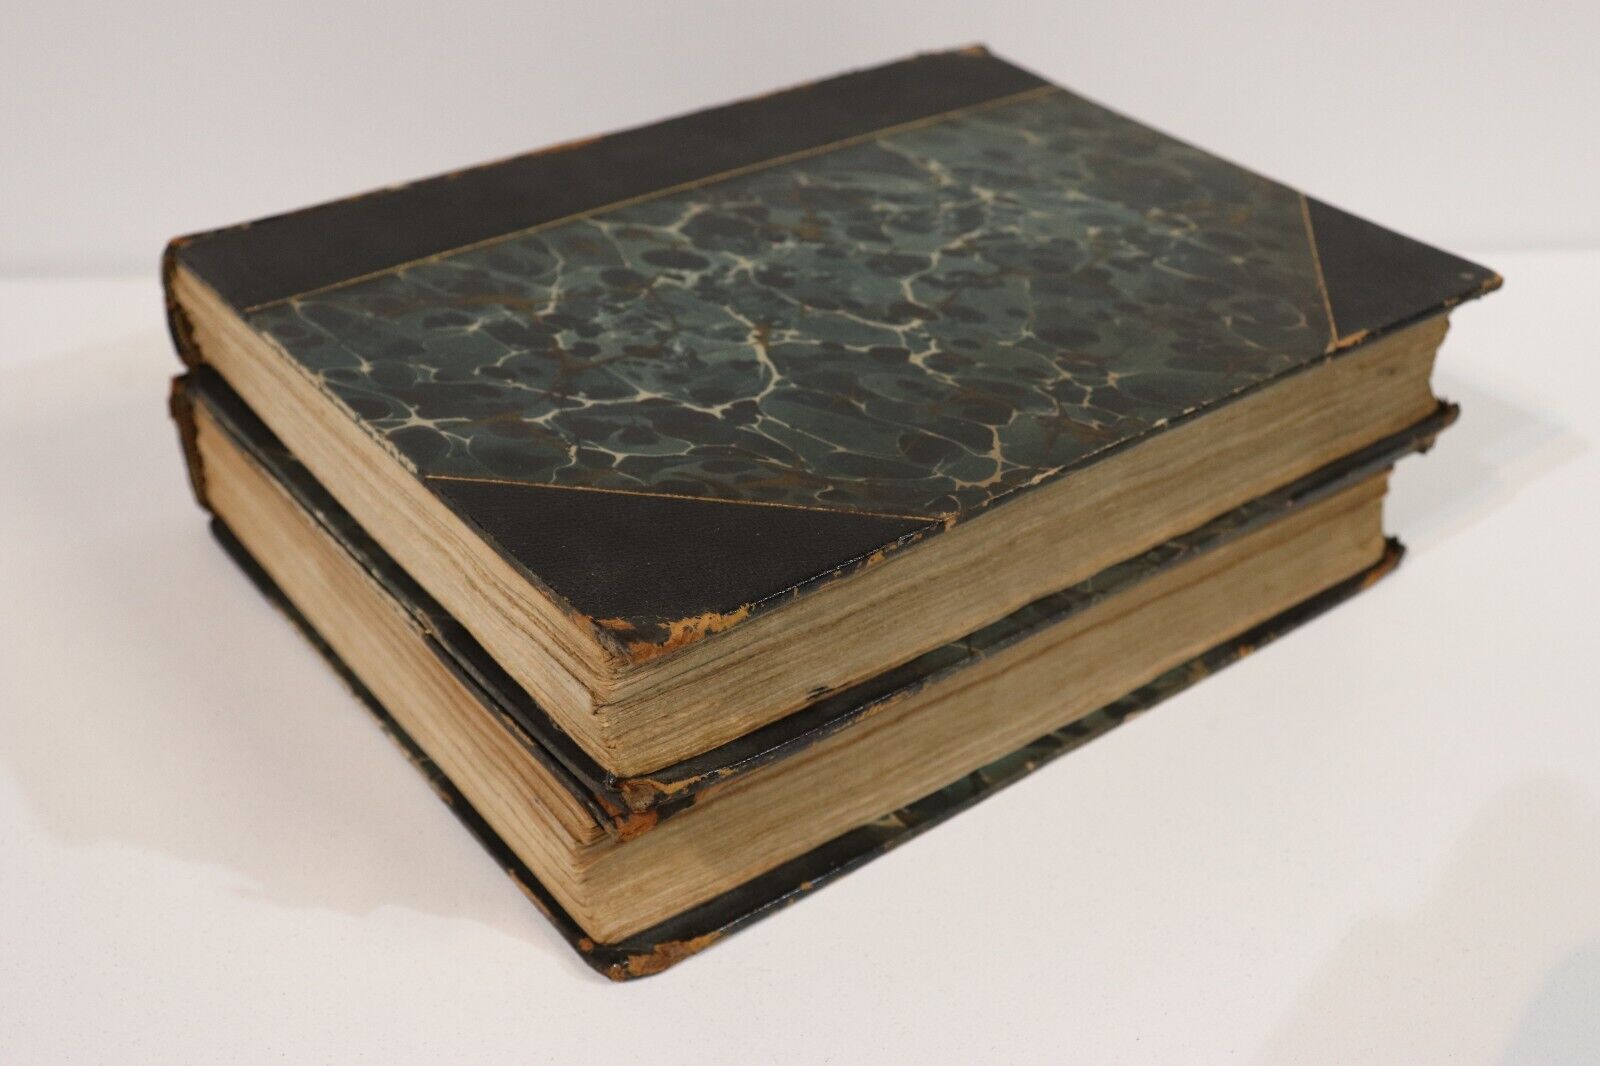 1770 2vol Explicatio Litteralis, Historica, et Dogmatica Antiquarian Books - 0